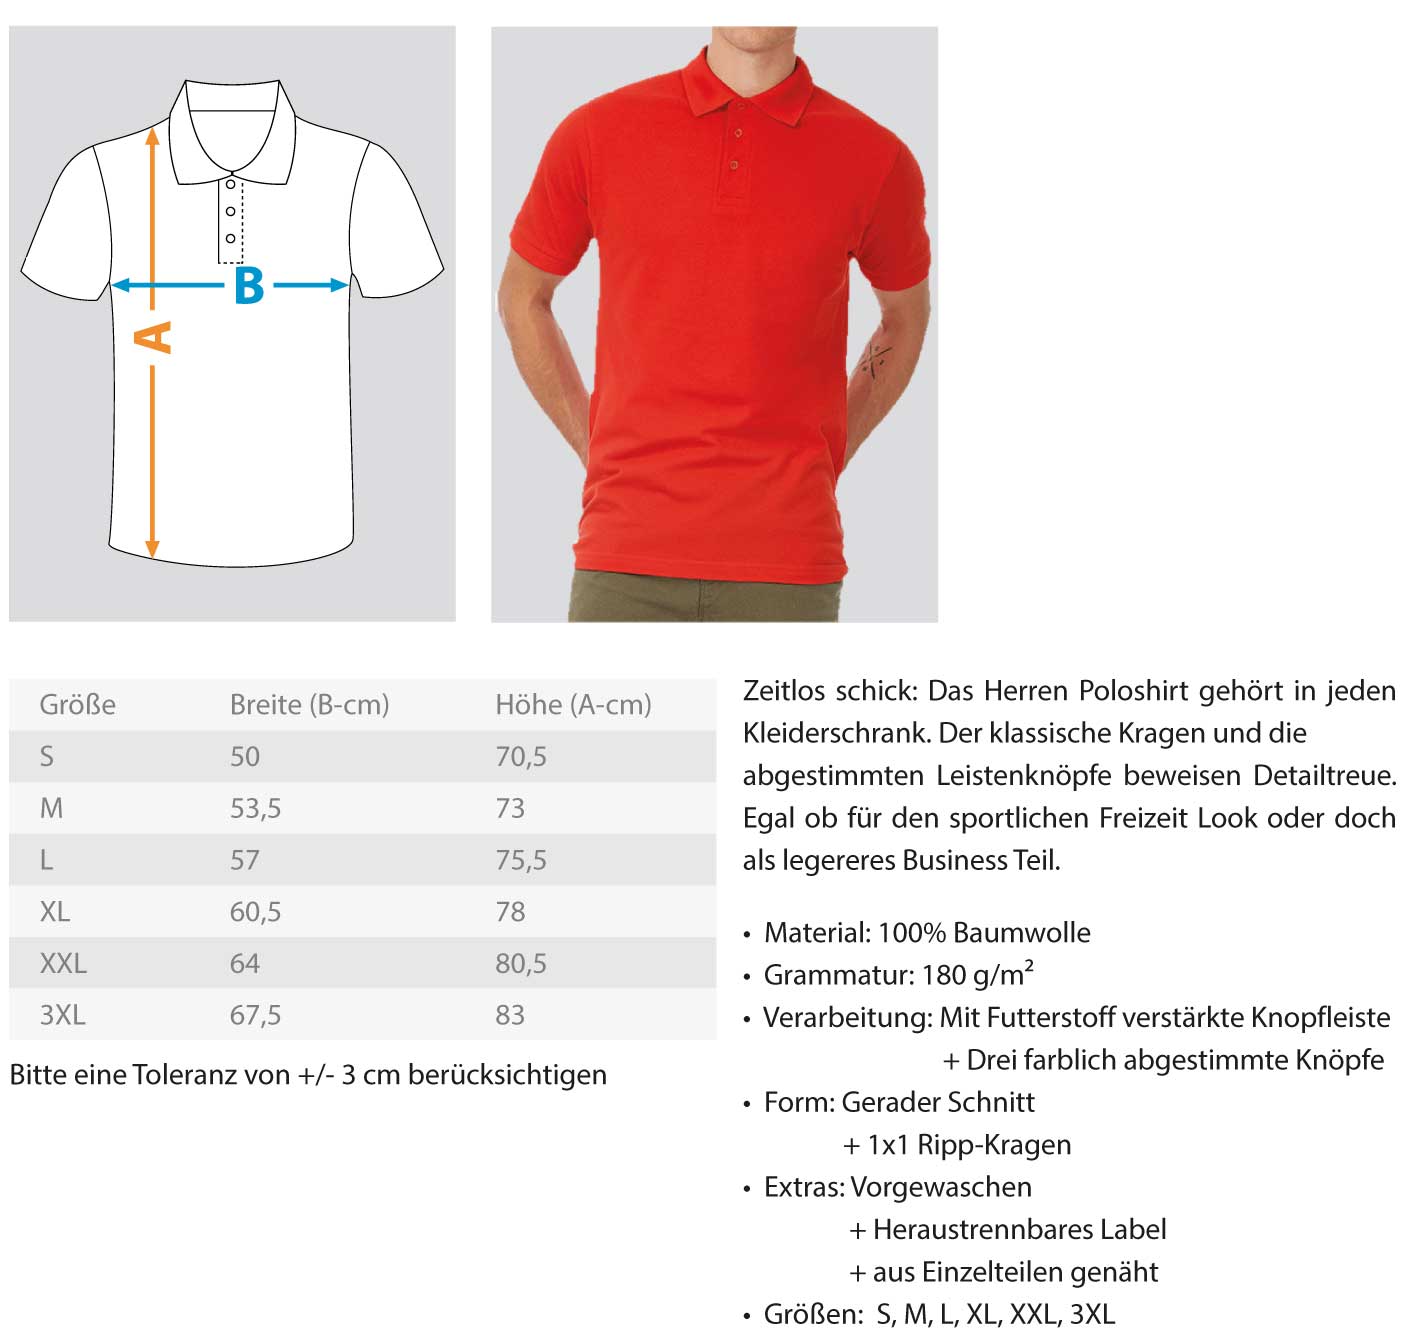 H+P Gerüstbau  - Polo Shirt €32.95 Gerüstbauer - Shop >>